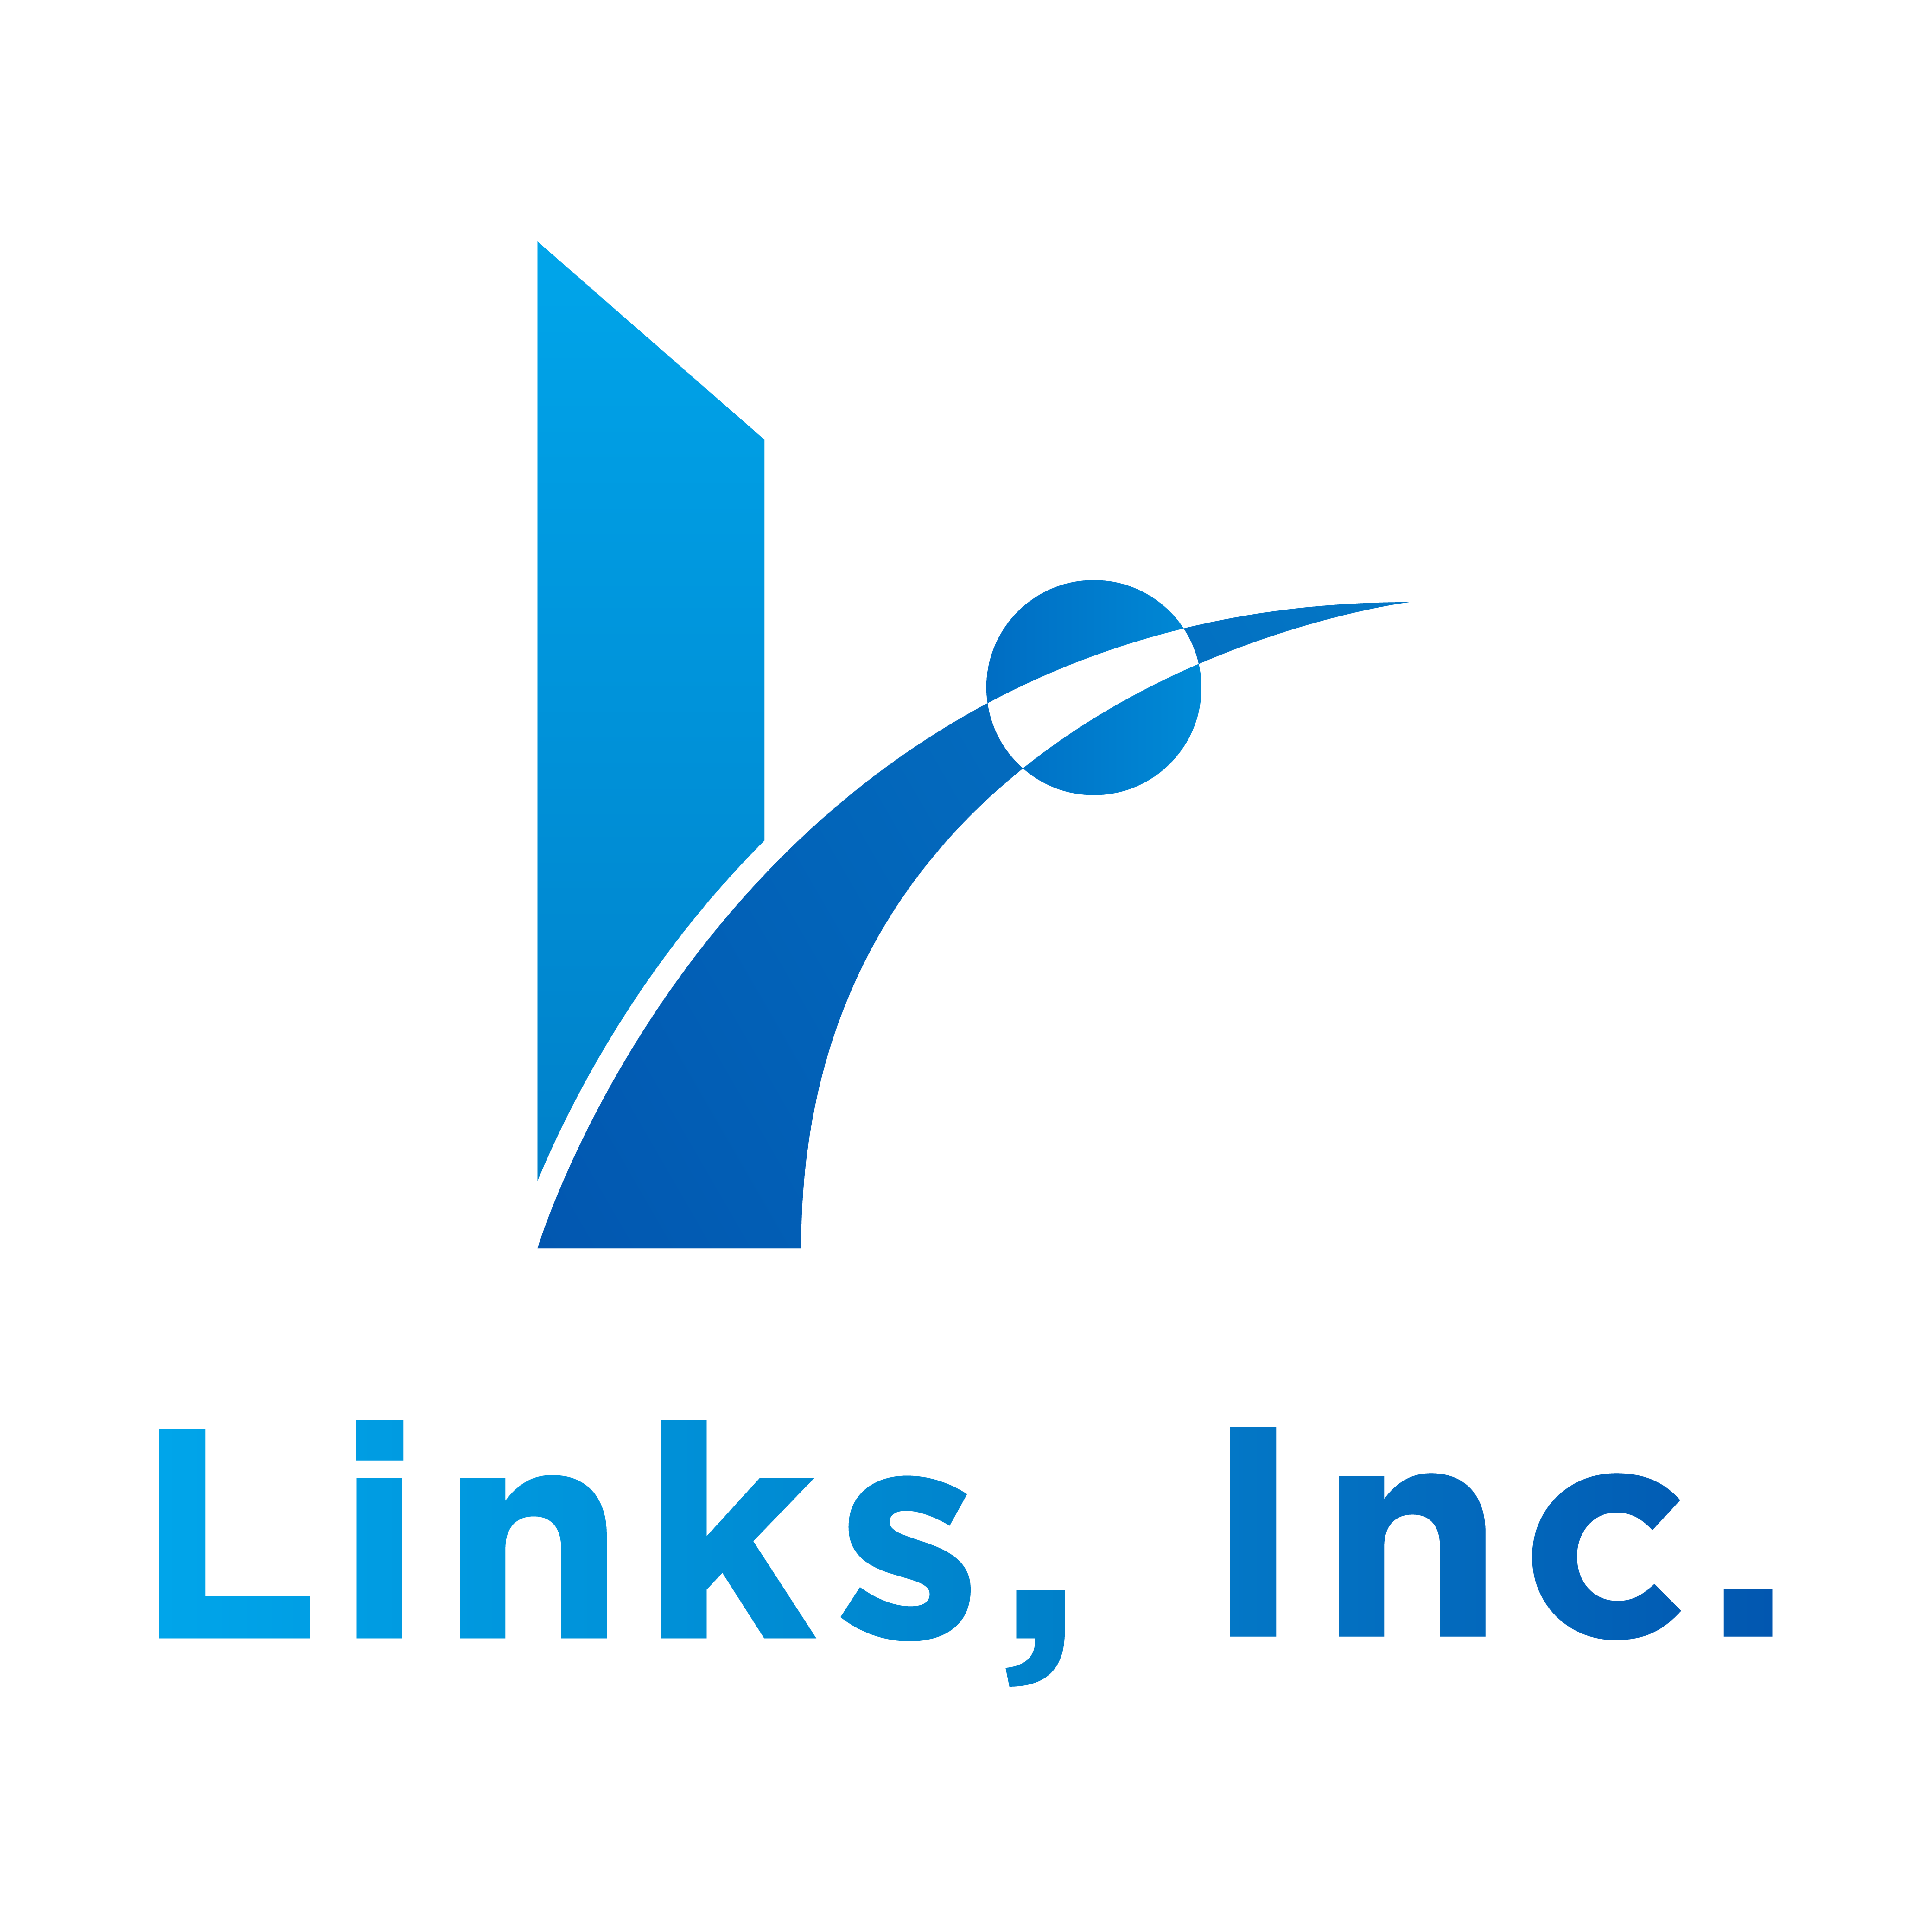 Links株式会社